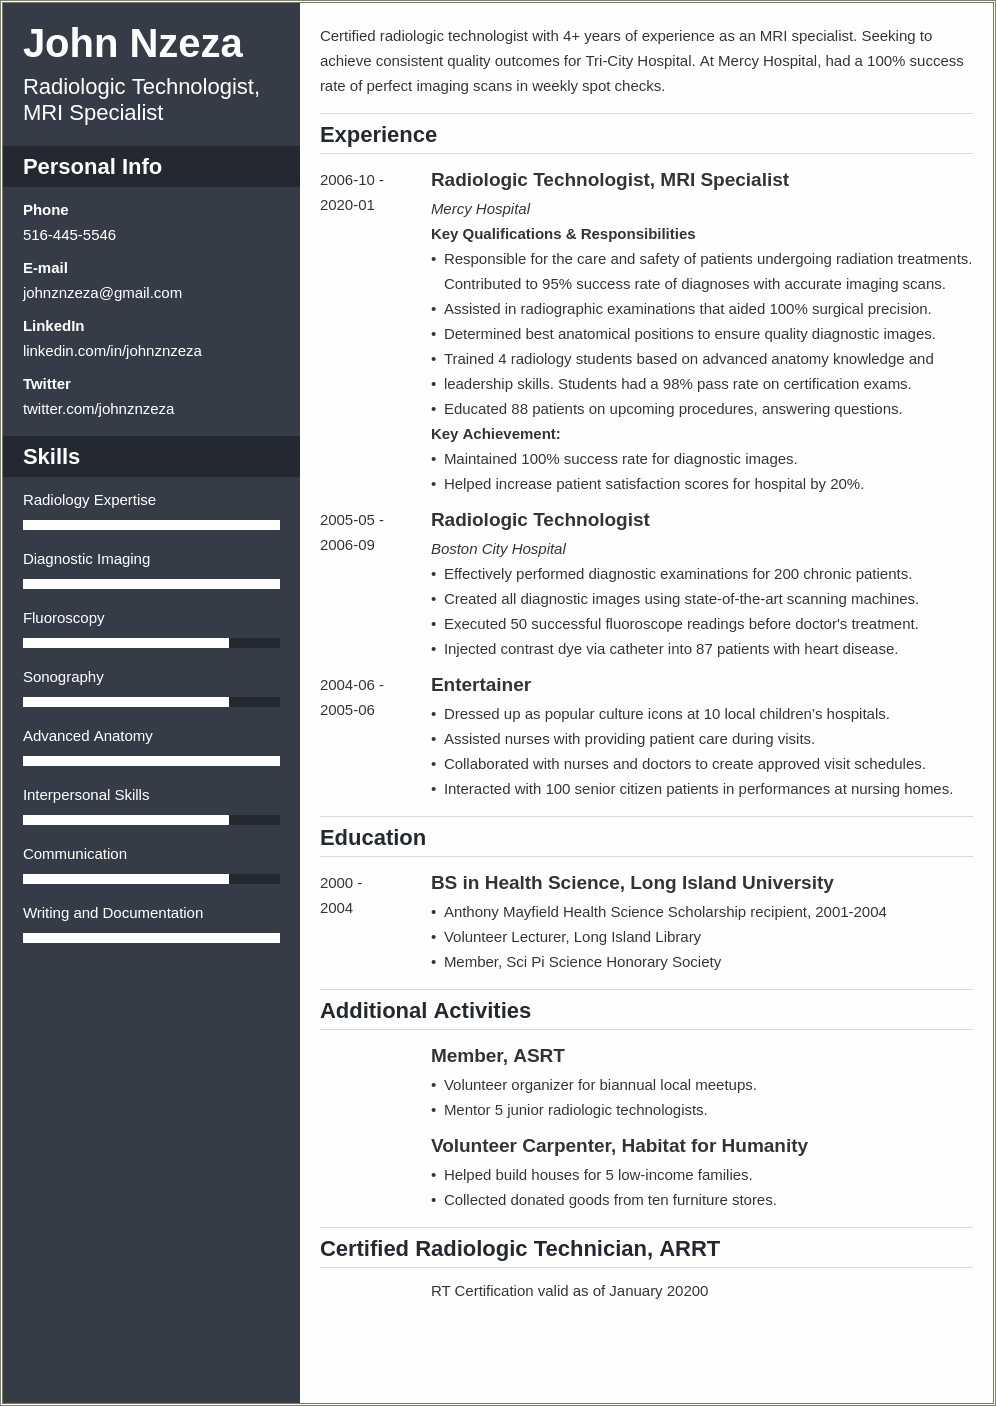 Radiation Therapist Job Description For Resume - Resume Example Gallery